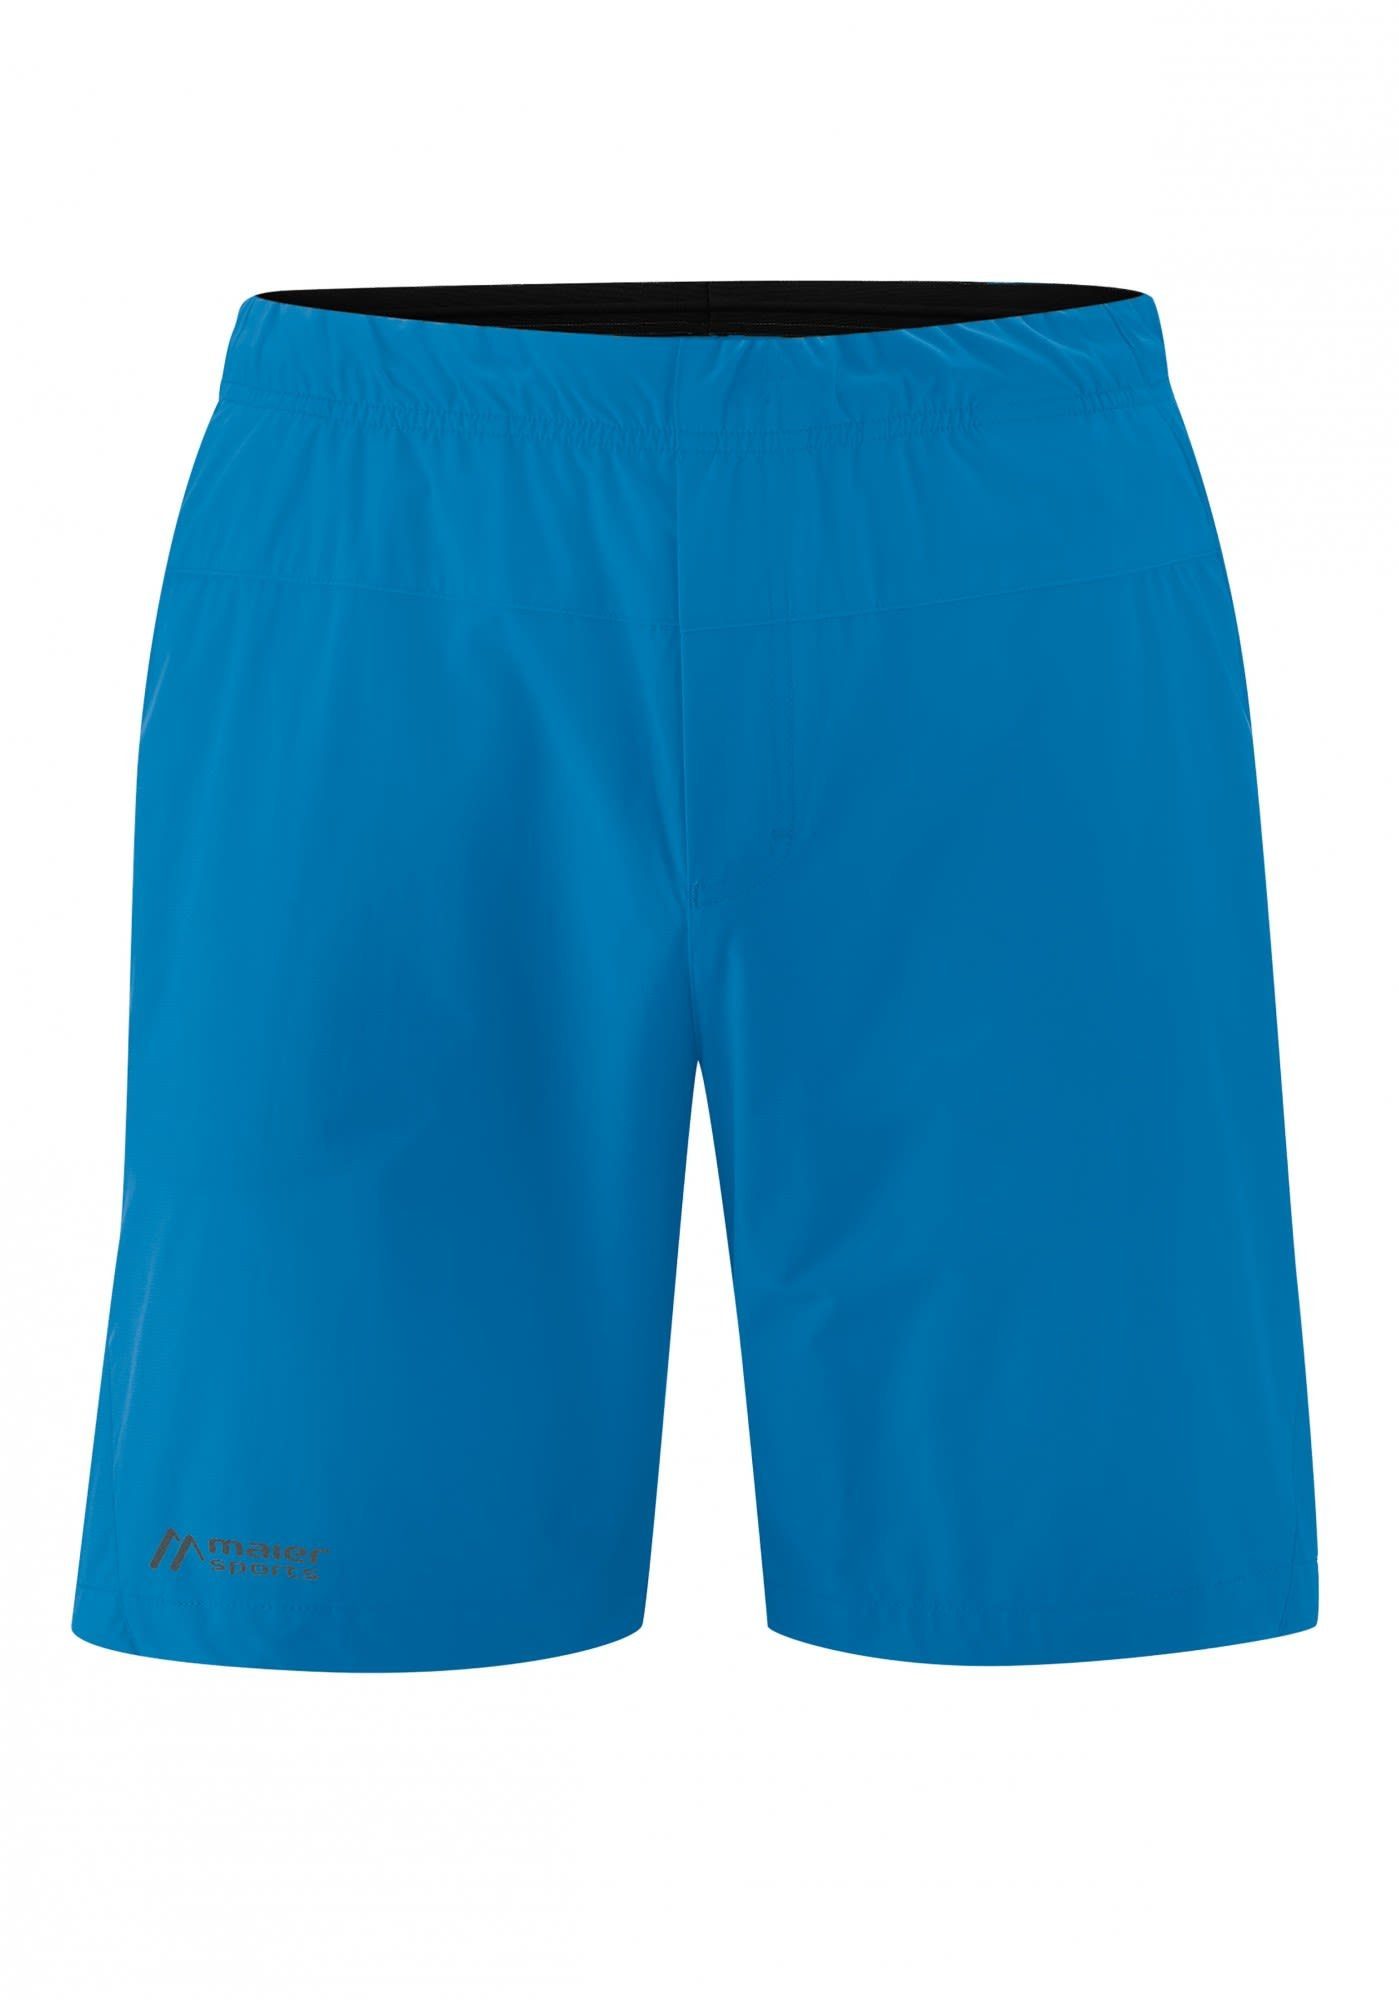 Maier Sports Strandshorts Maier Sports M Fortunit Short Herren Shorts Imperial Blue | 